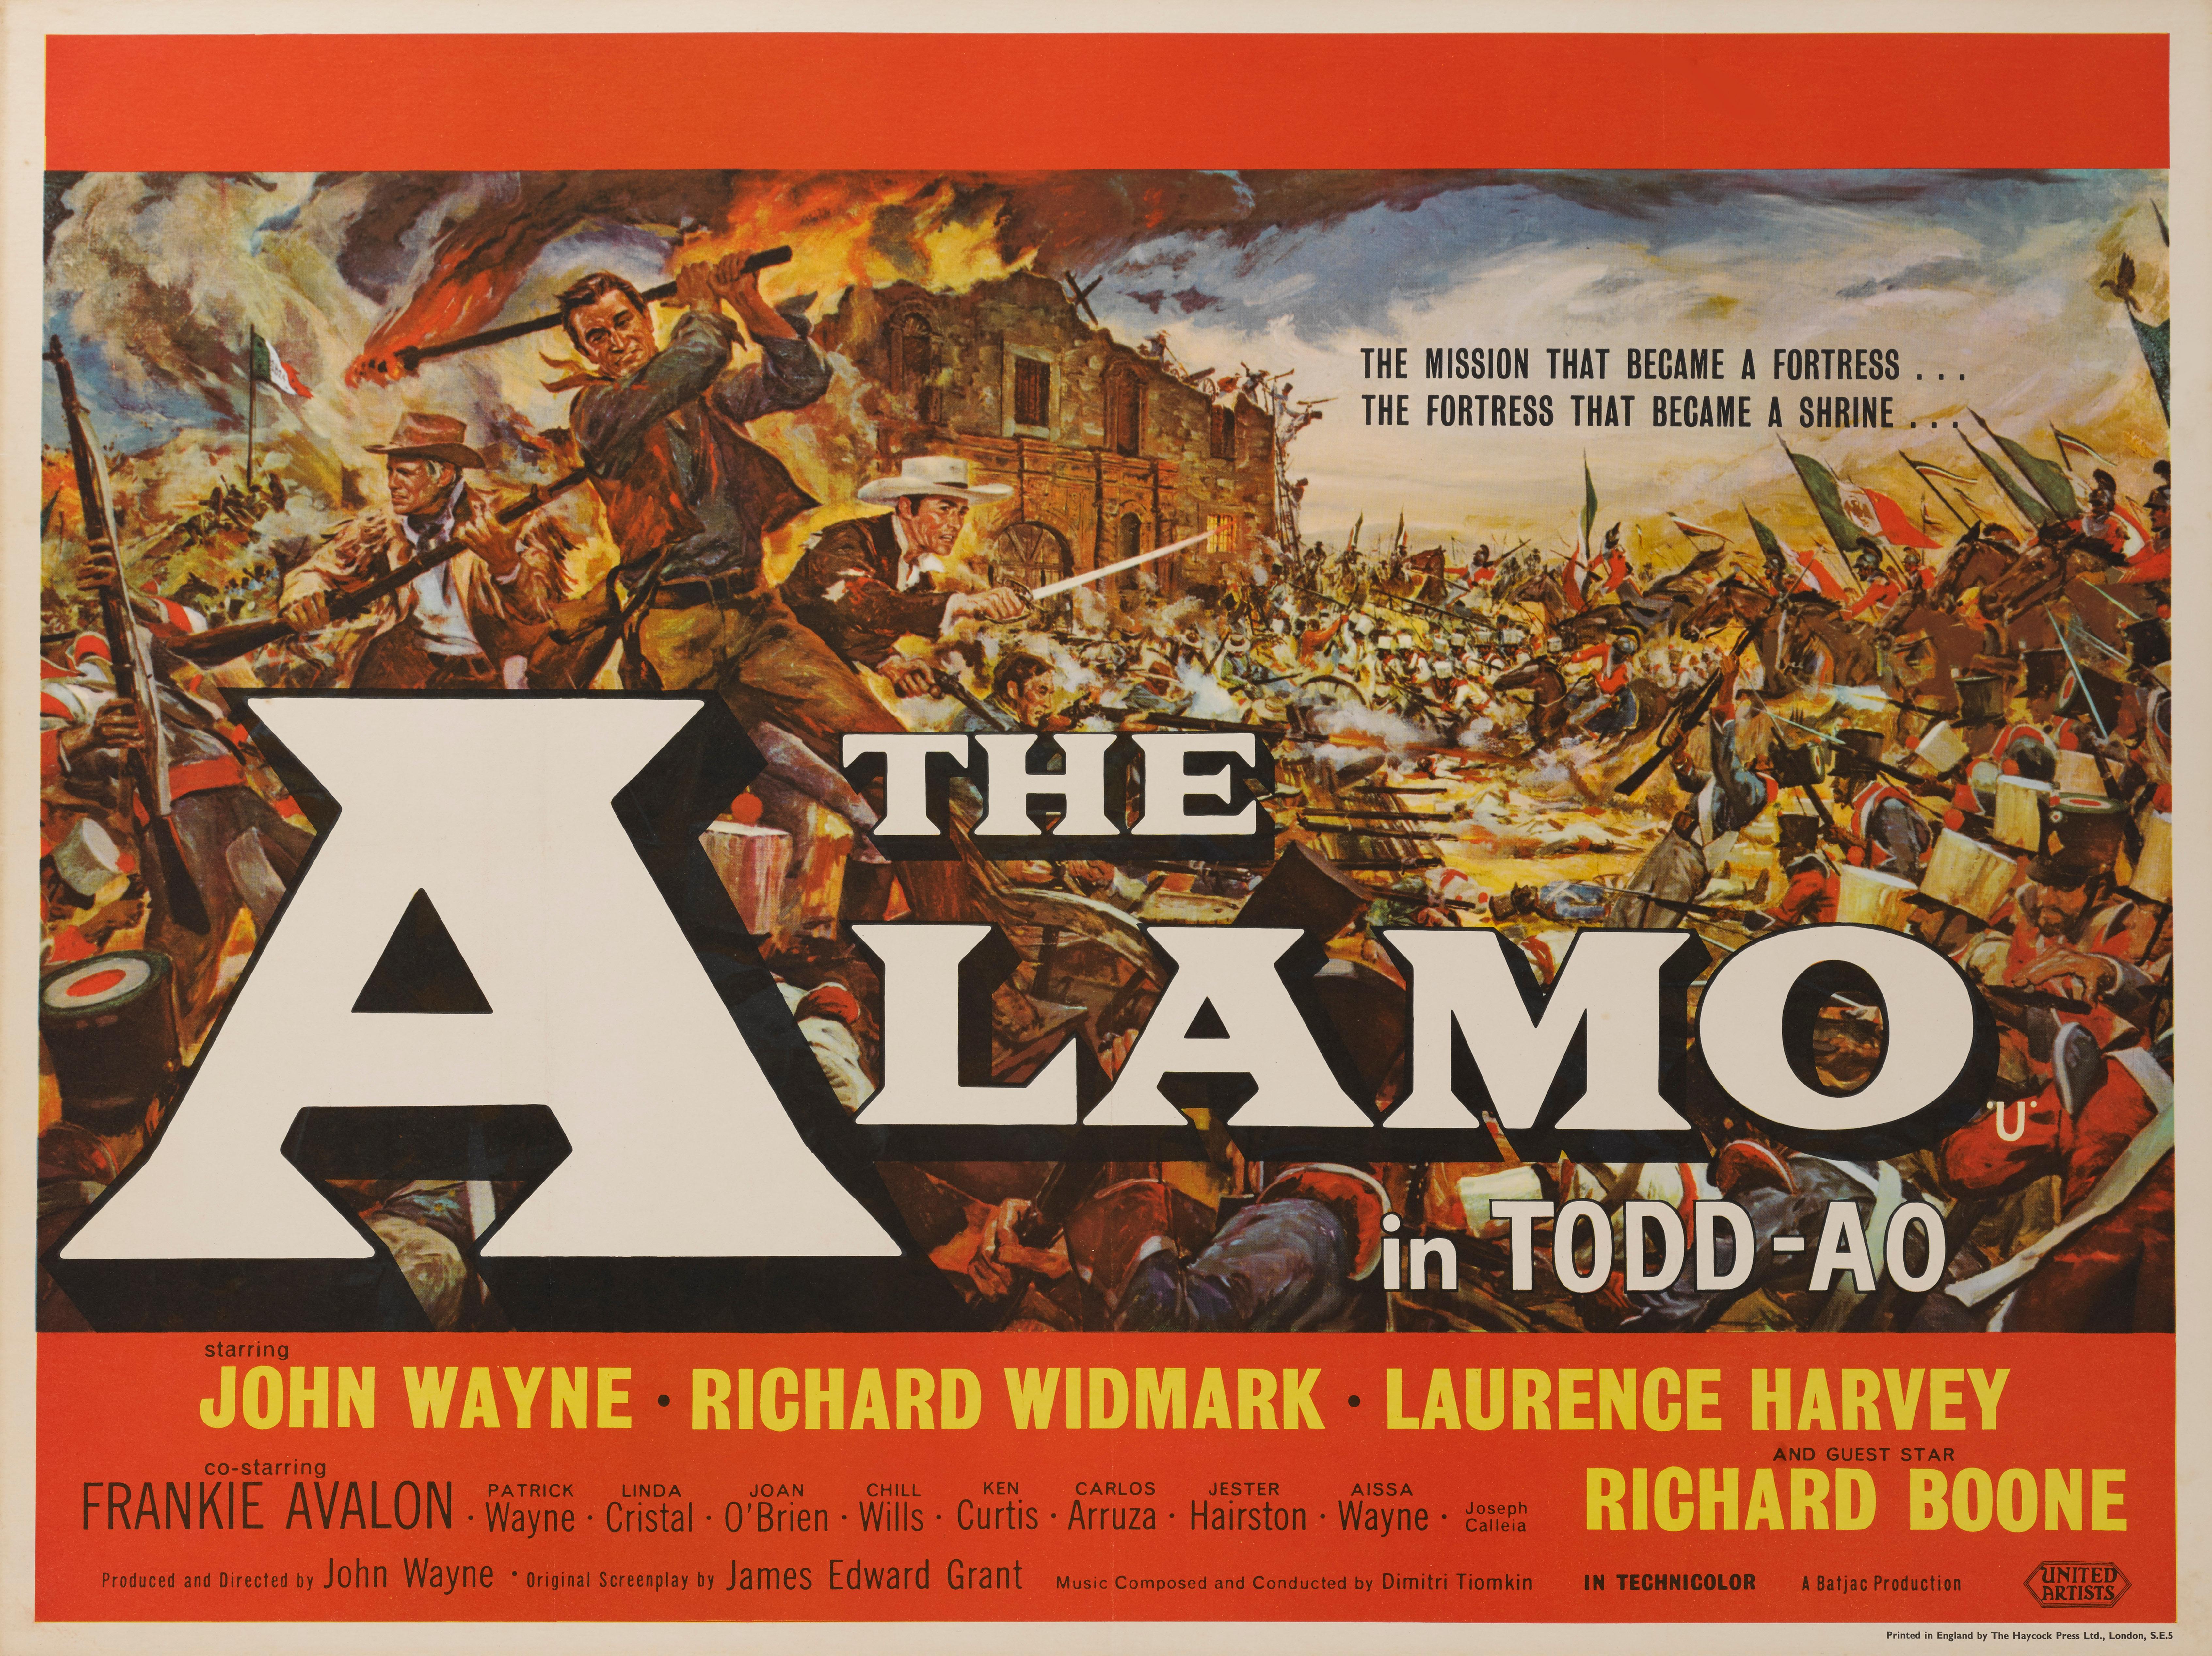 the alamo movie poster